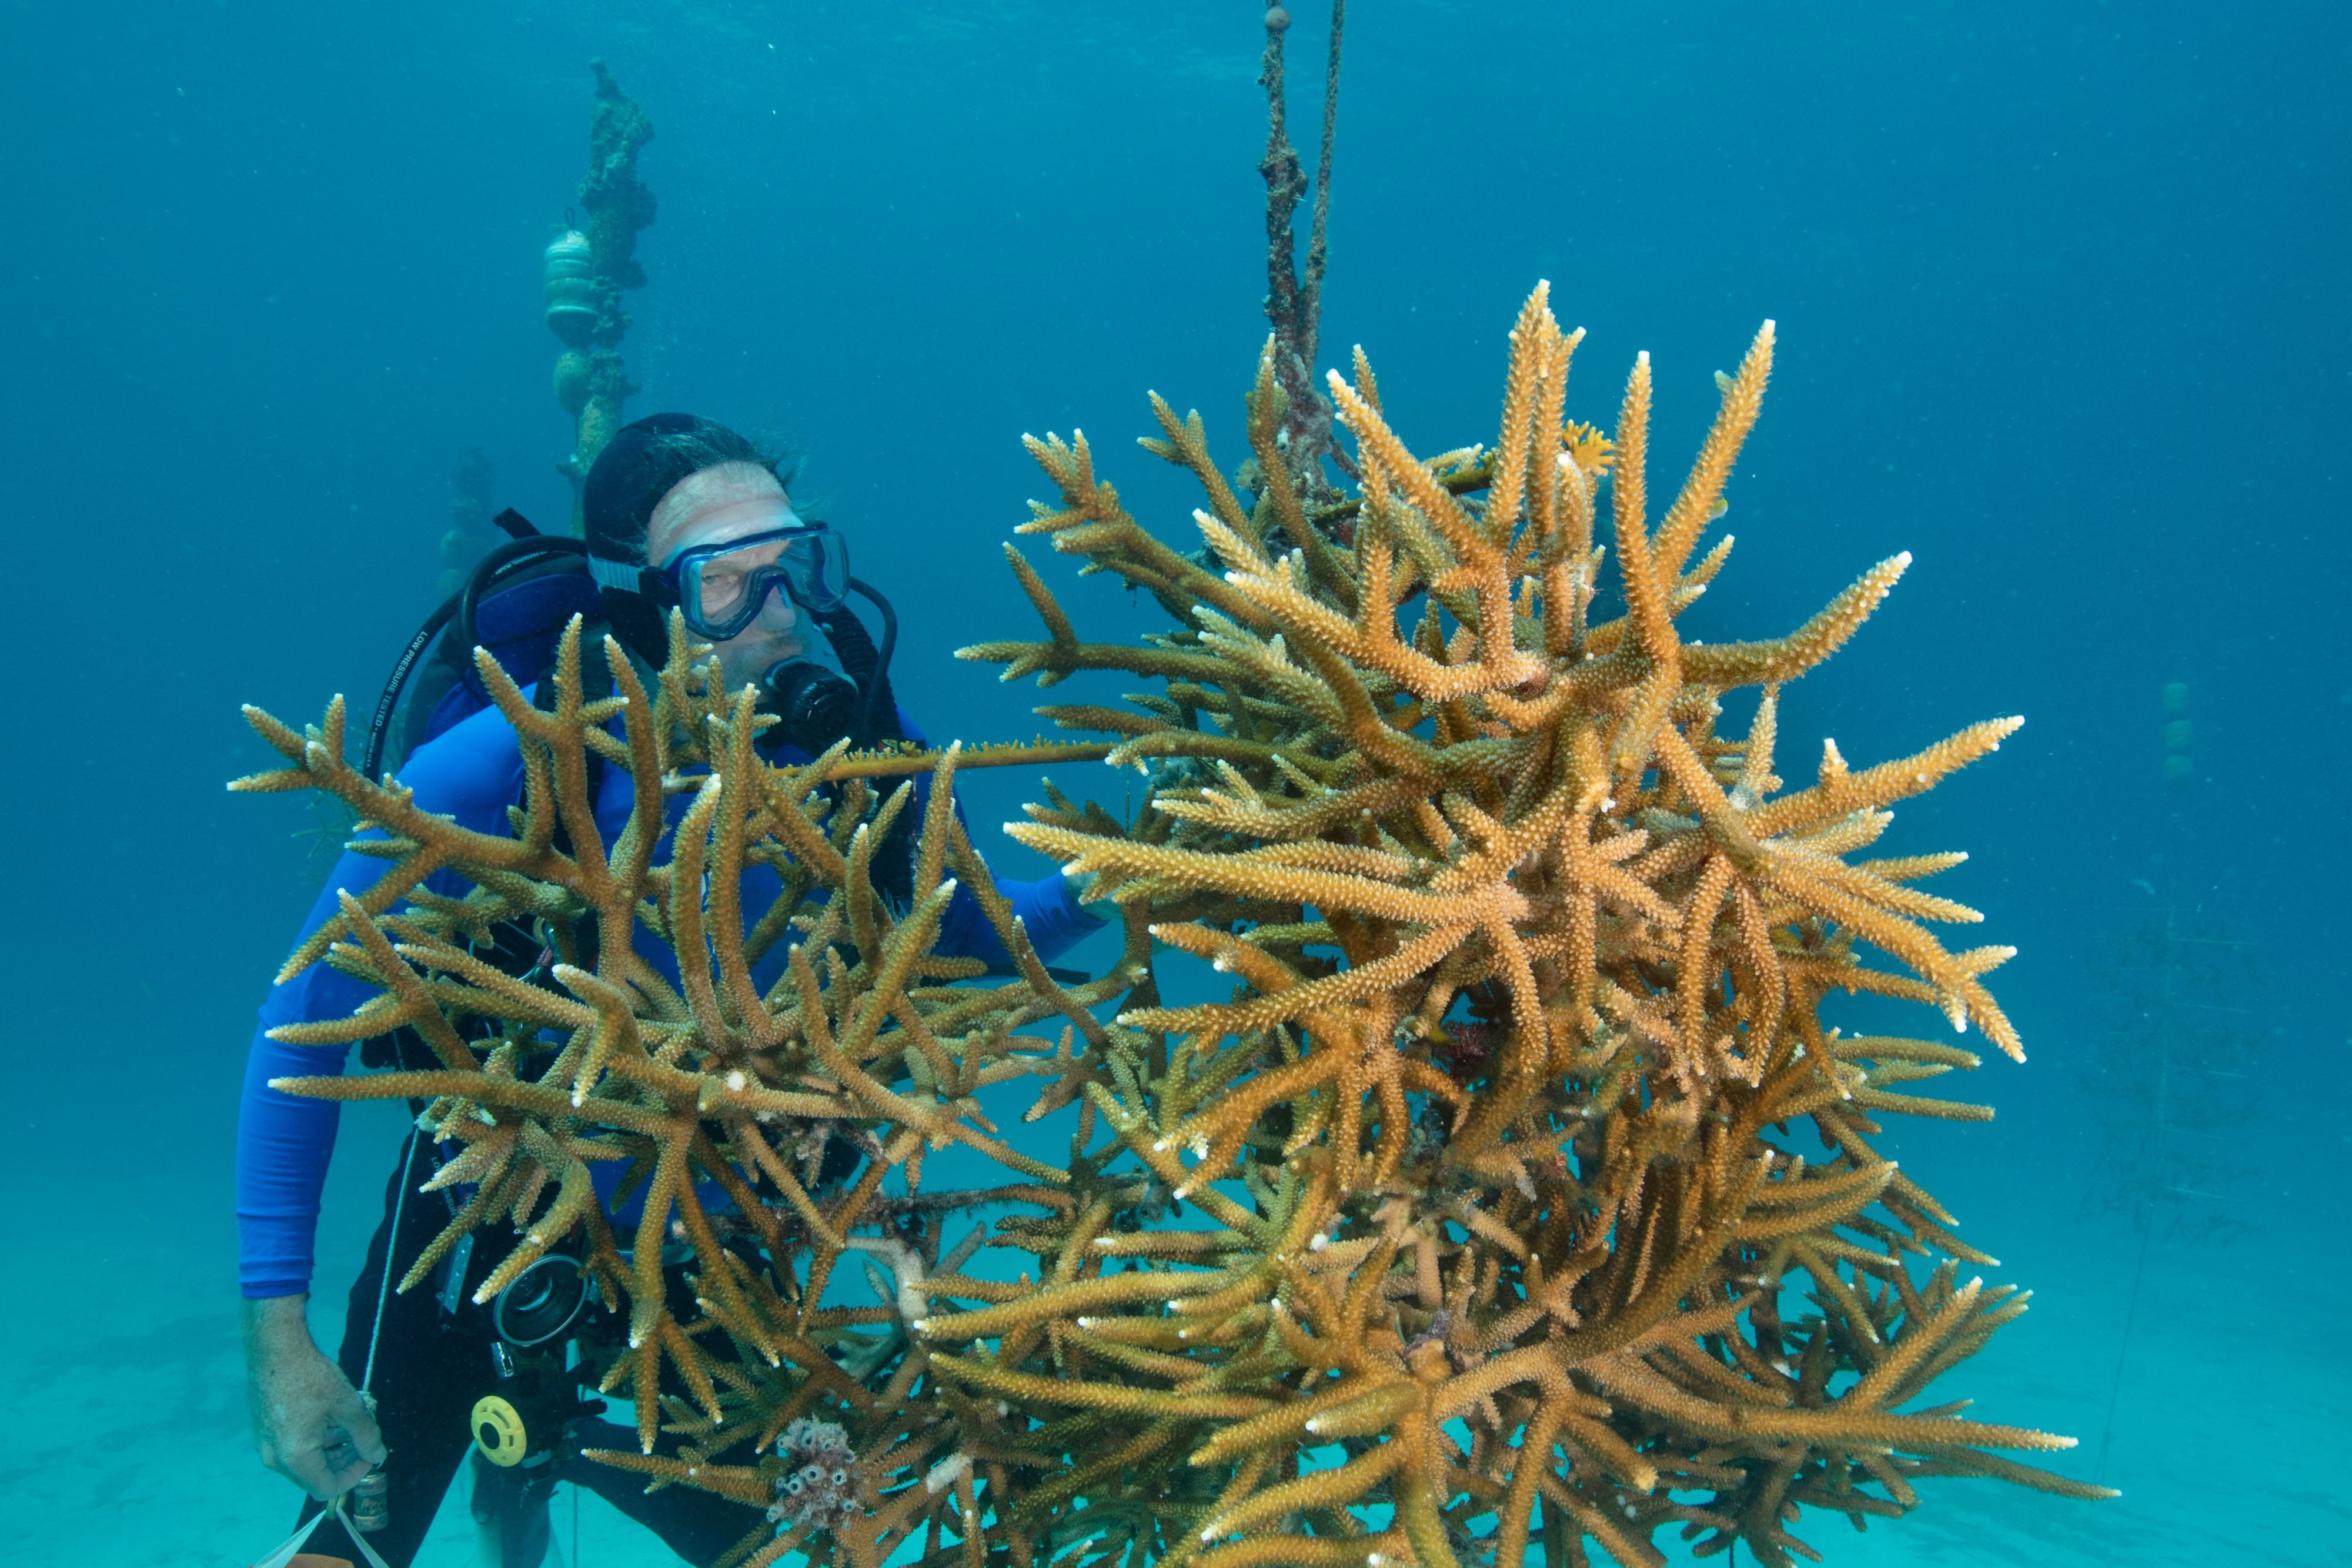 Scuba diver inspecting a coral colony